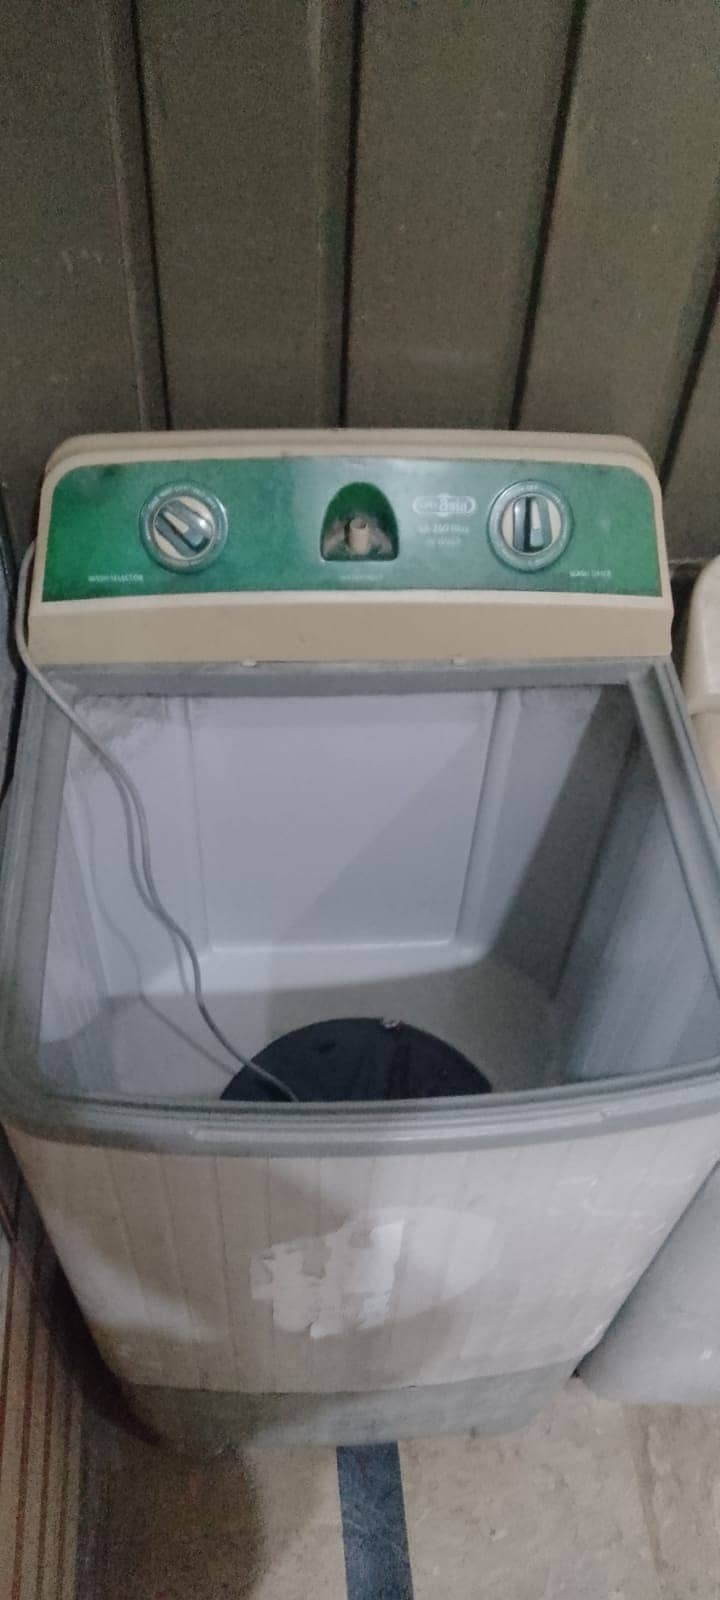 Super Asia 12 KG washing machine with a spinner machine 2